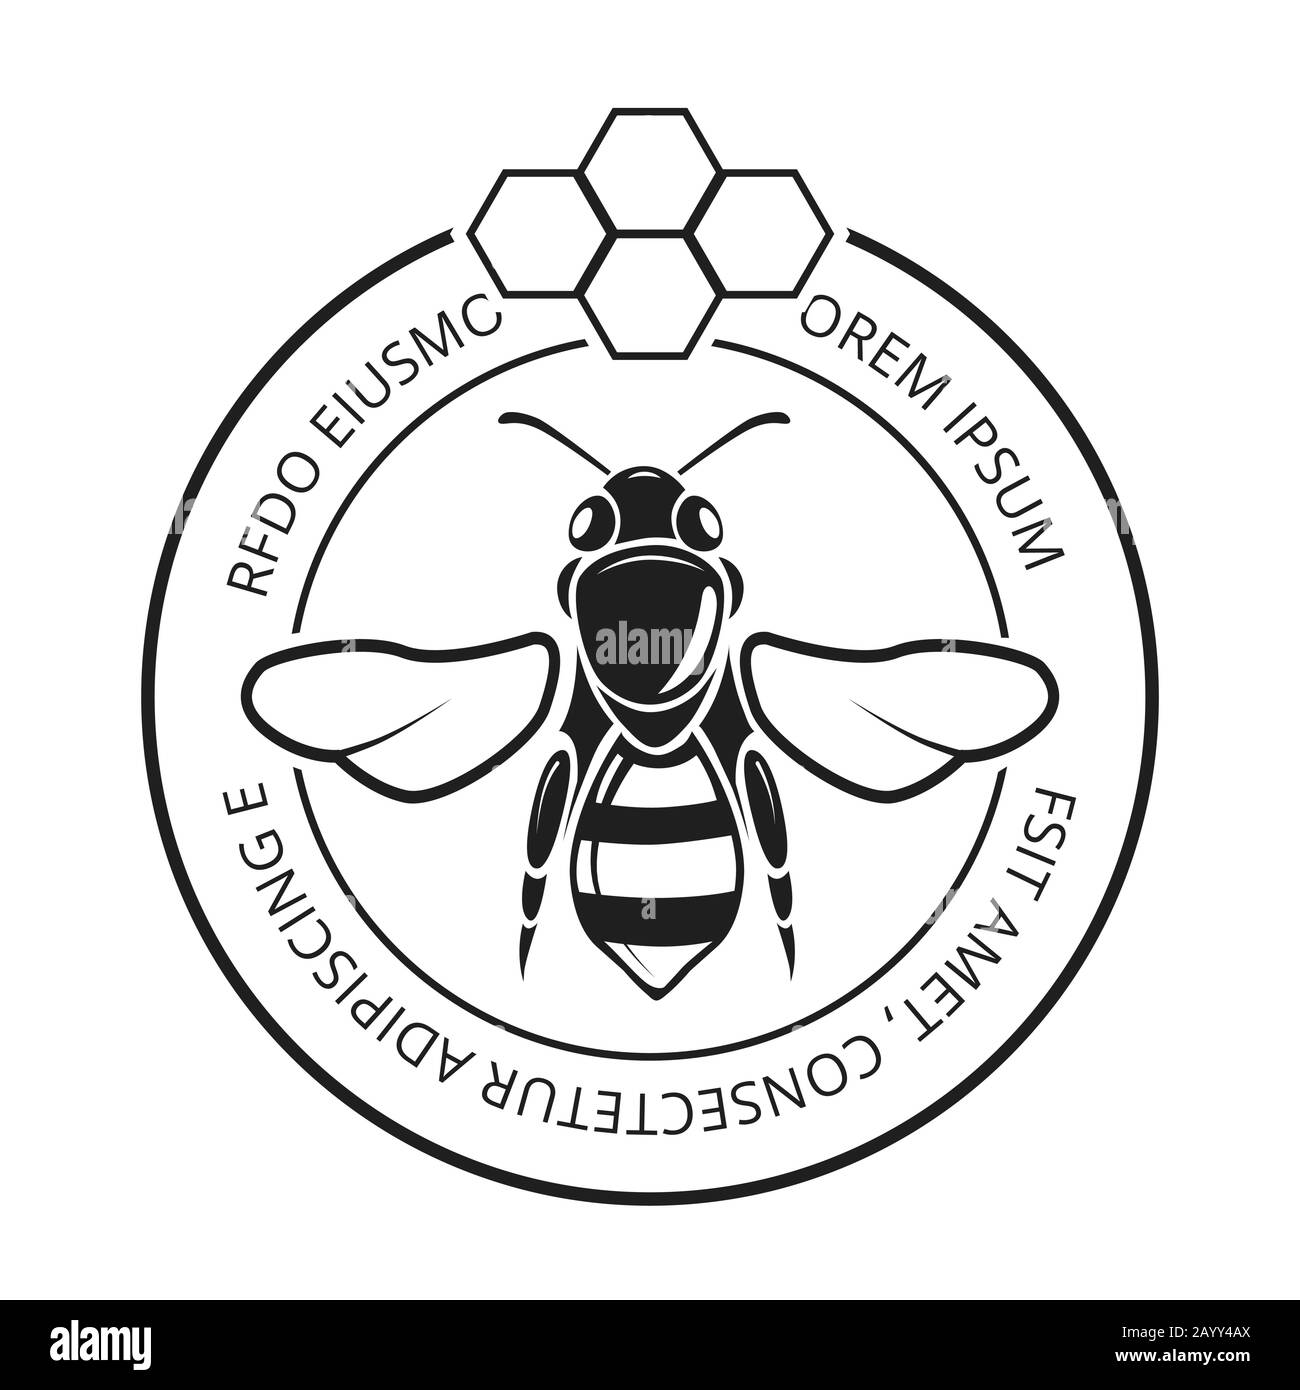 Retro honeybee, beekeeper, honey logo. Natural symbol and label with honeycomb, vector illustration Stock Vector